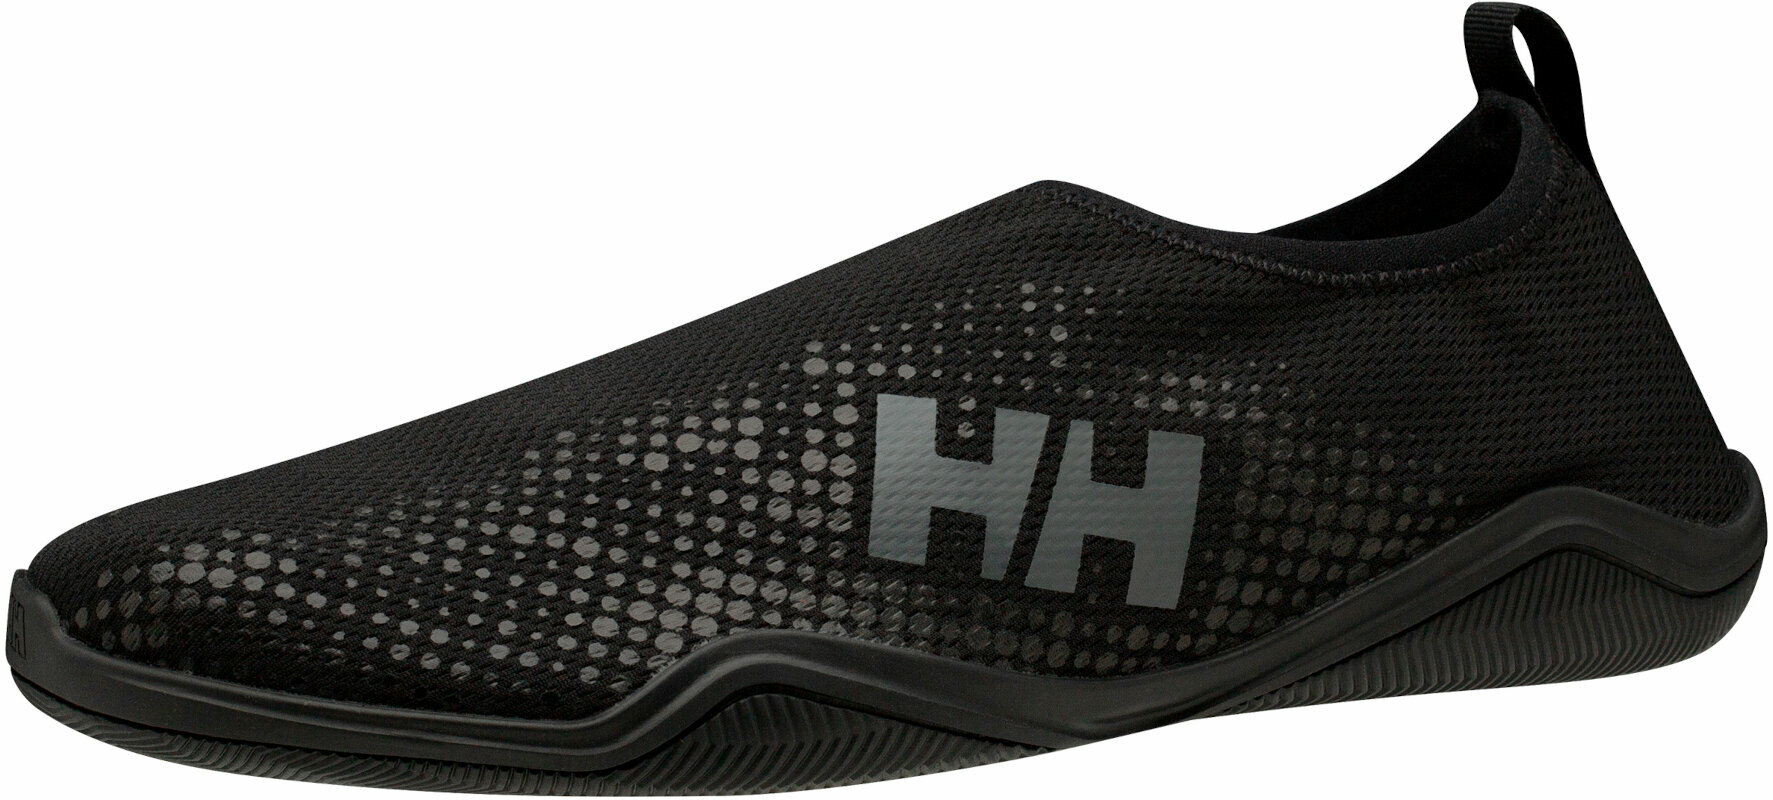 Herrenschuhe Helly Hansen Men's Crest Watermoc Black/Charcoal 42,5